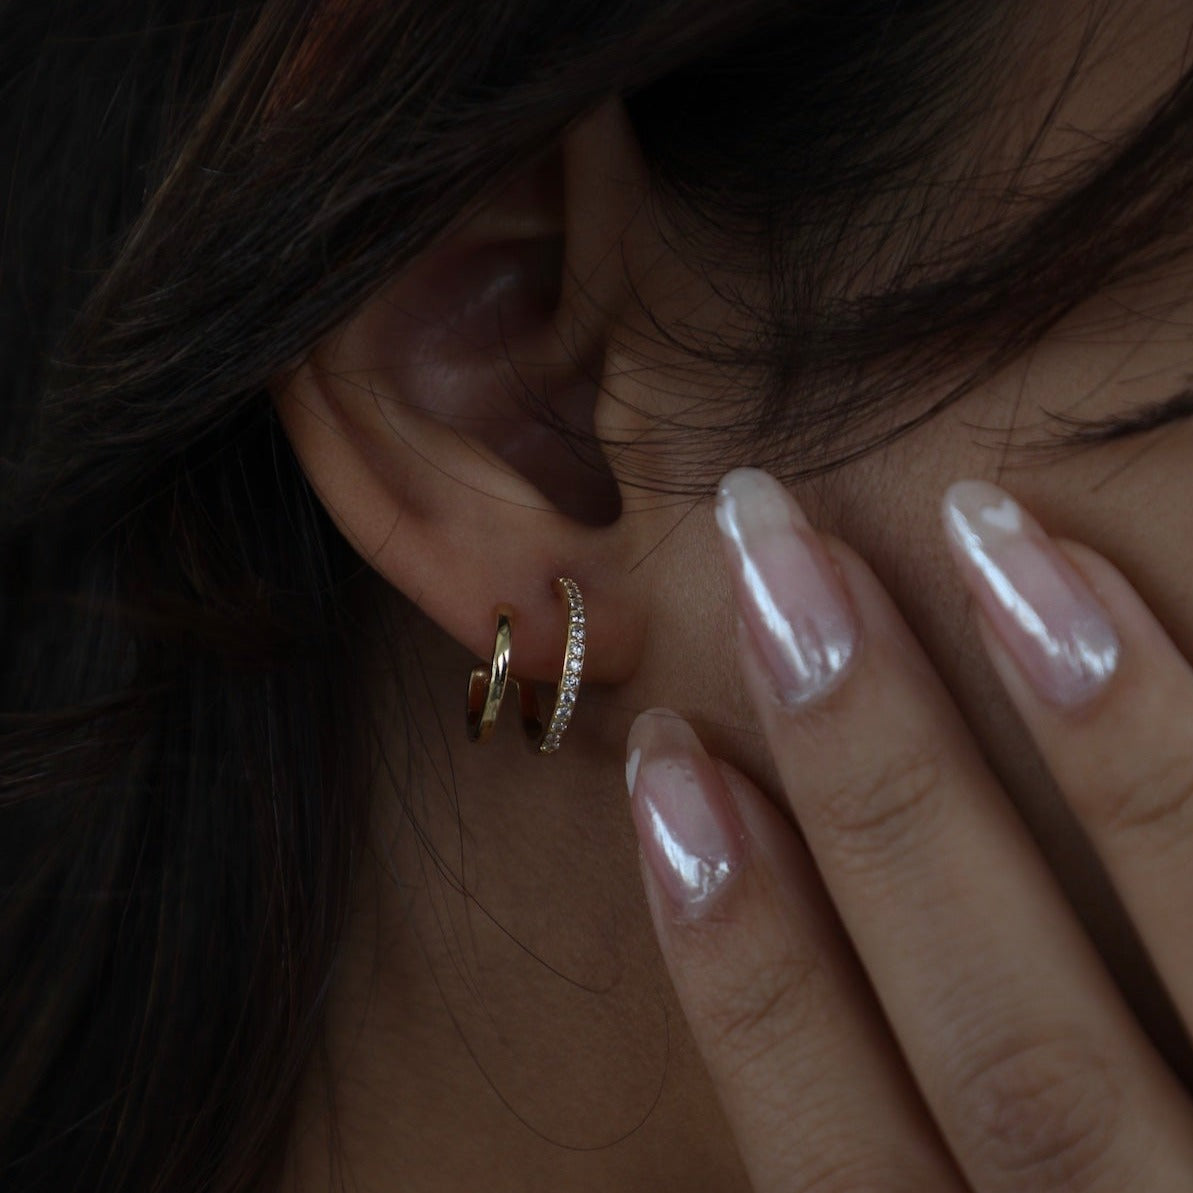 Pixie Earrings